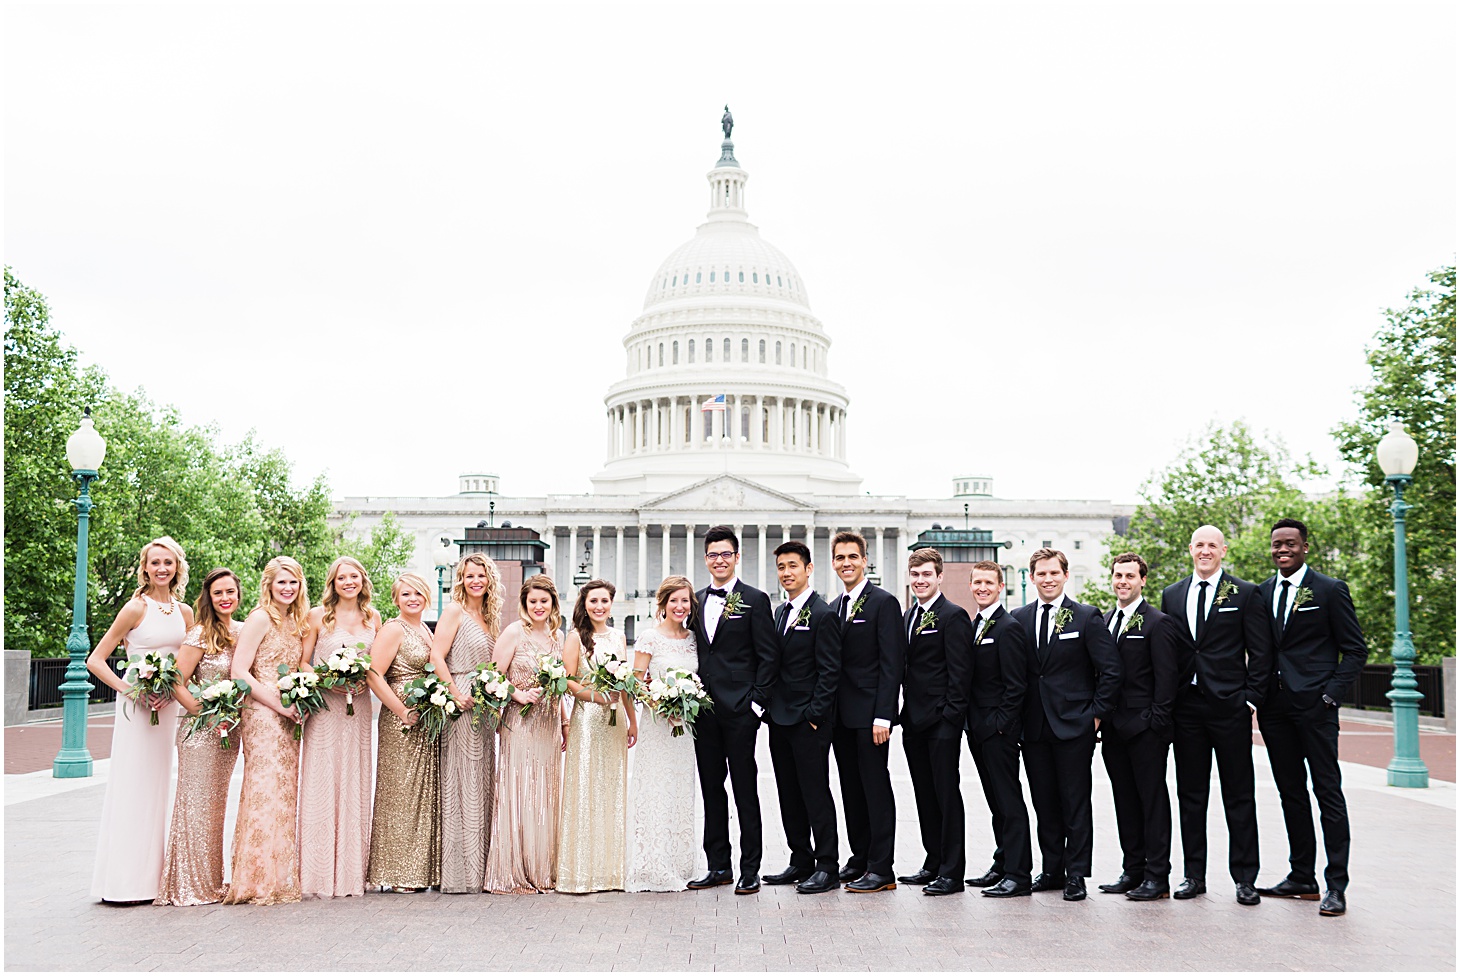 Blush & Gold Wedding Party | Top Washington DC wedding photographer Sarah Bradshaw